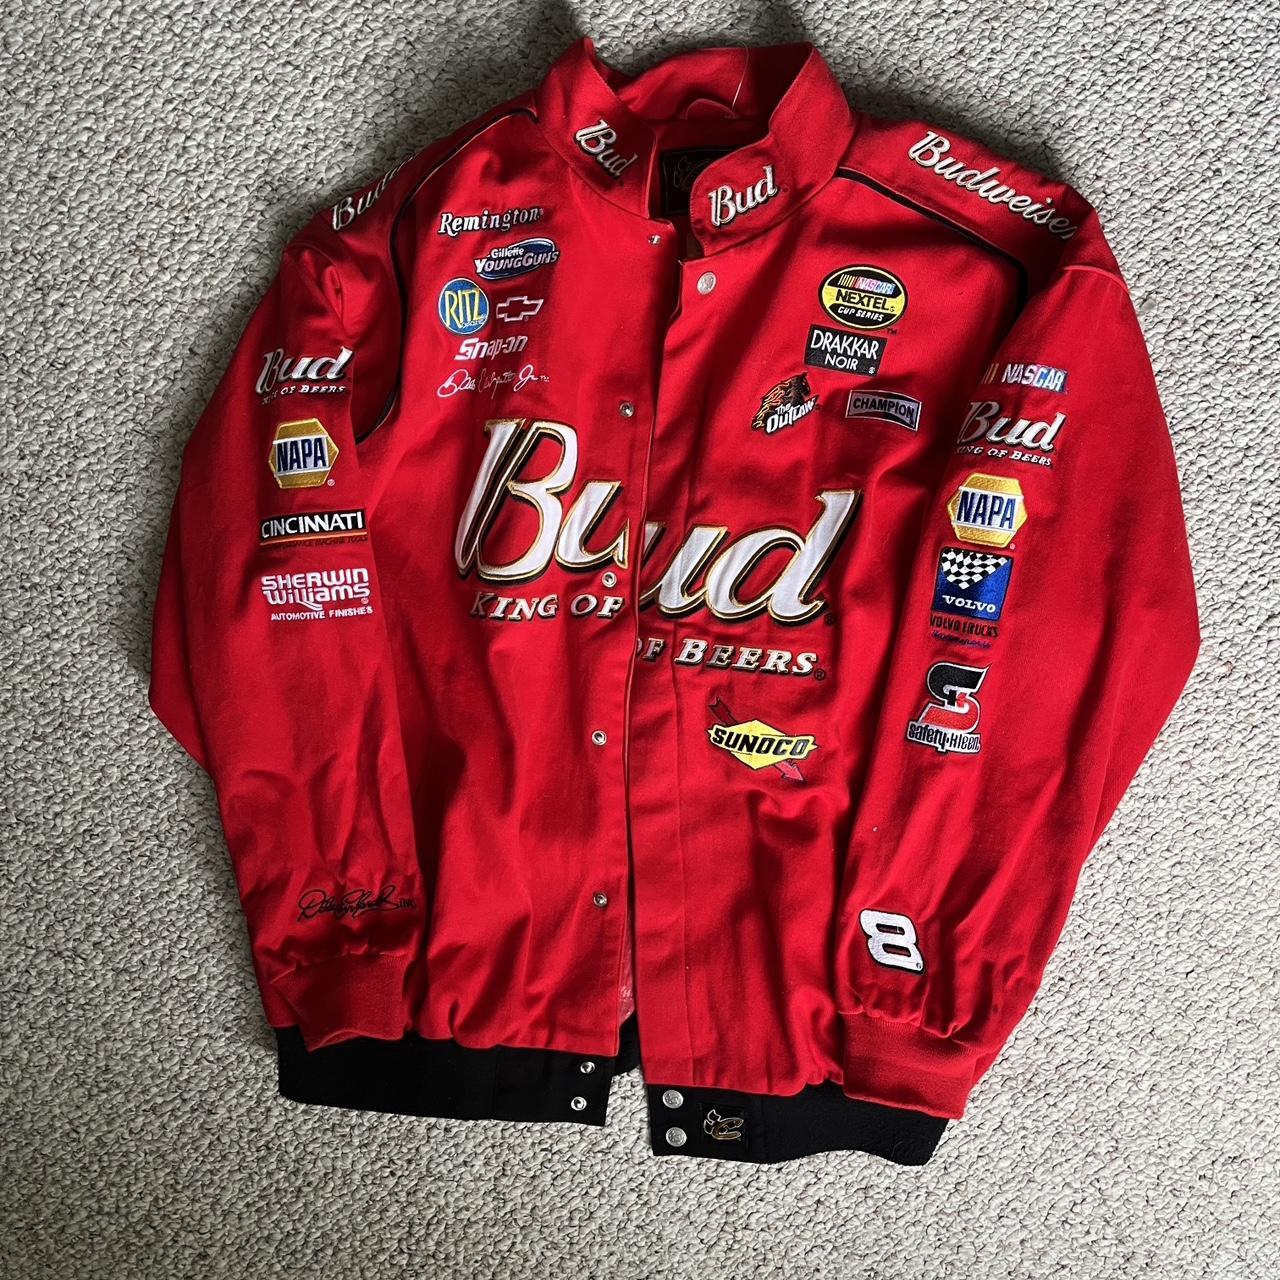 Embroidered Budweiser racing jacket - Depop